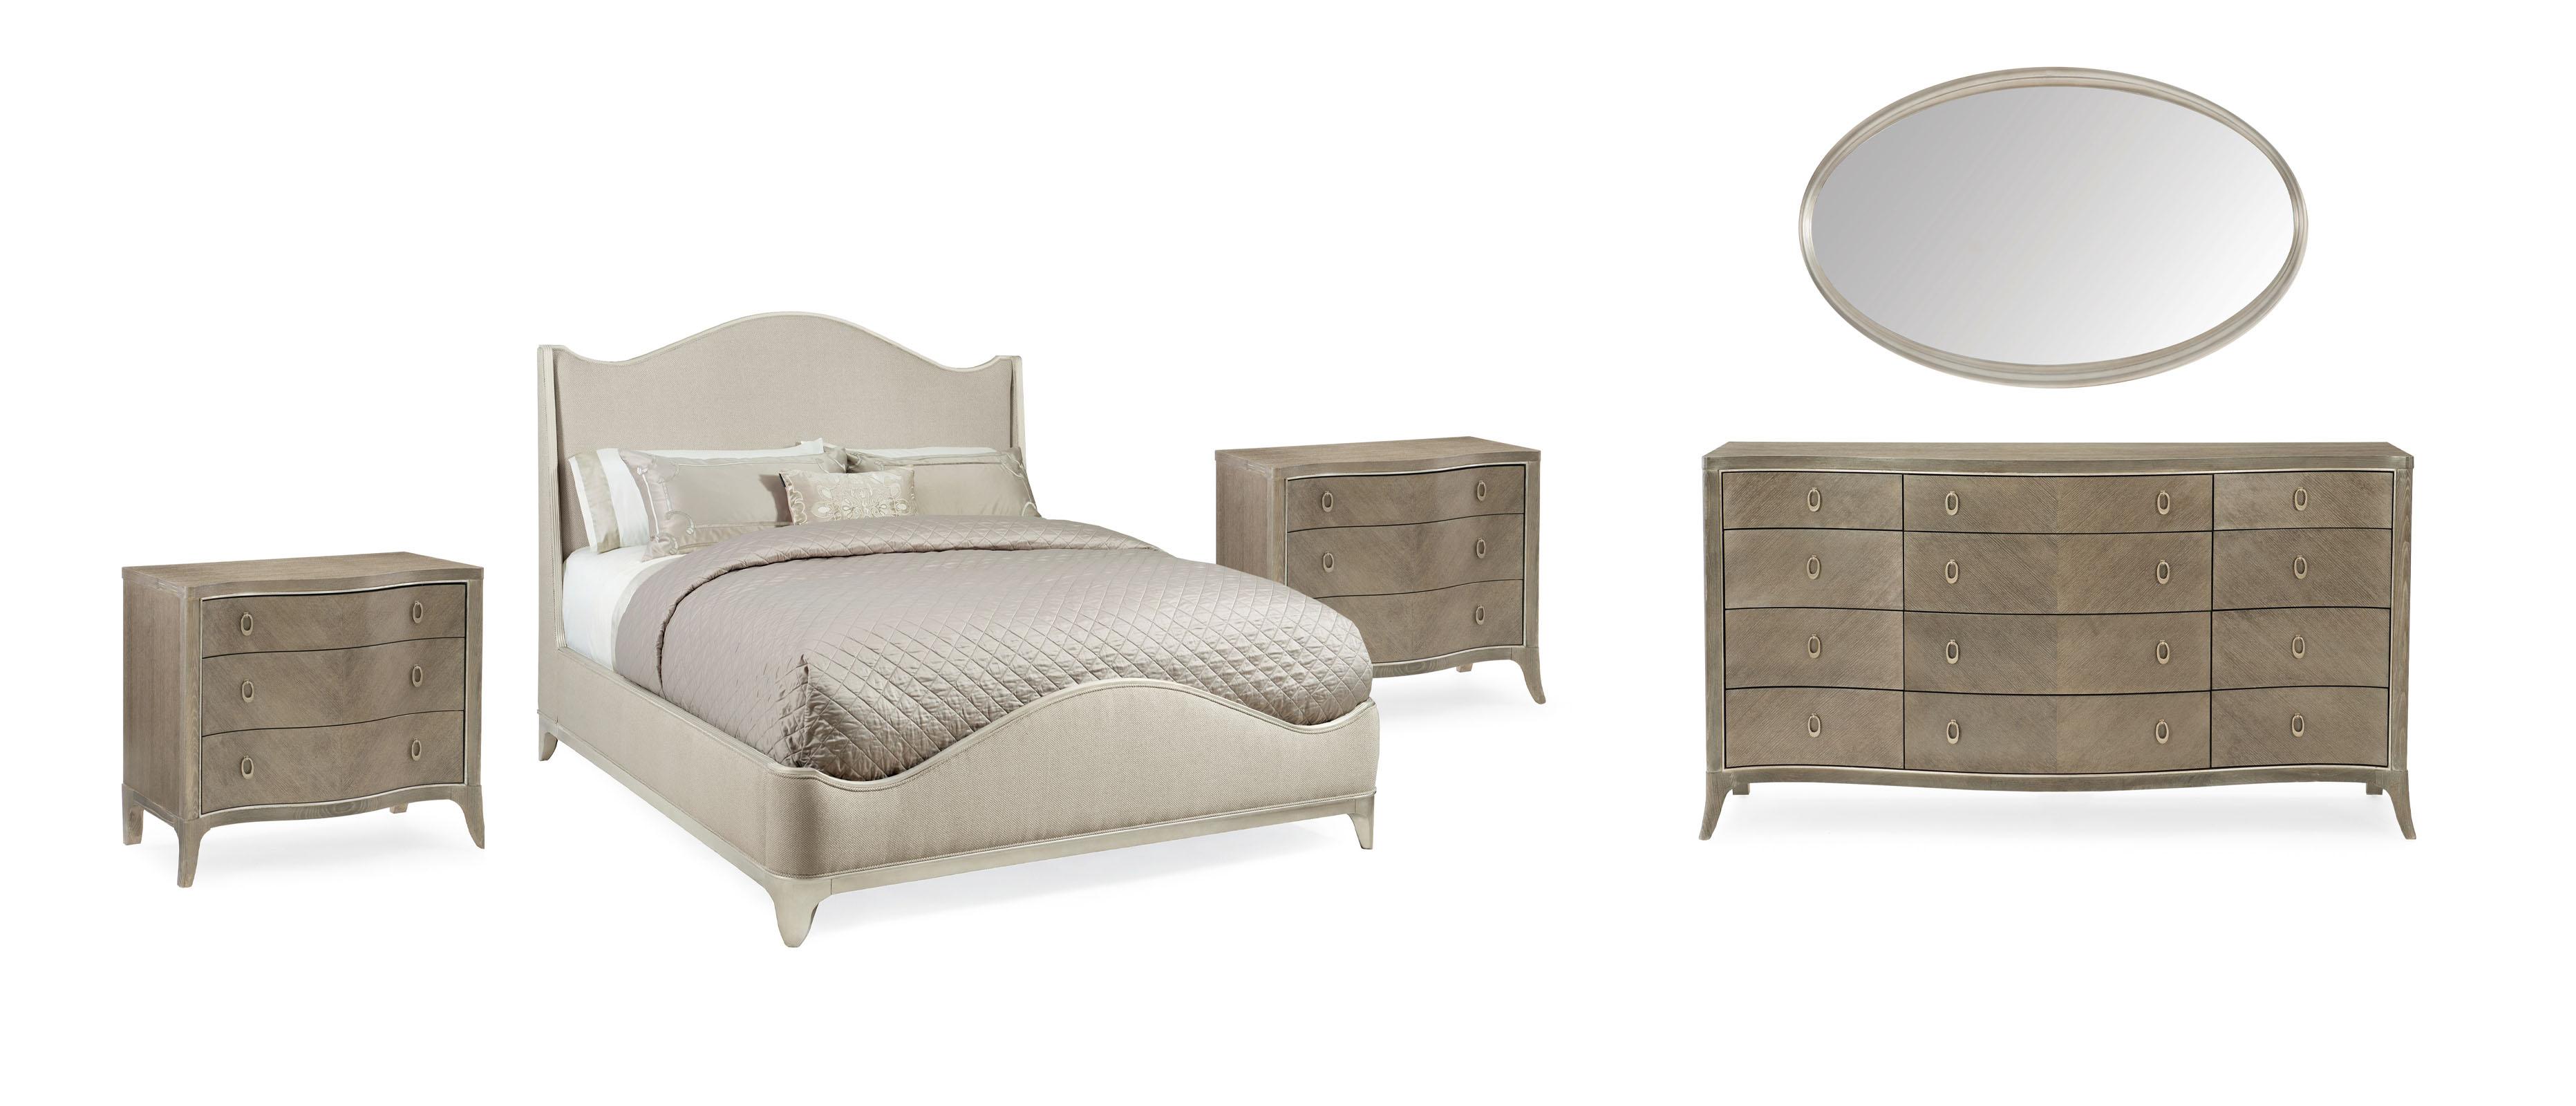 Contemporary Sleigh Bedroom Set AVONDALE QUEEN UPHOLSTERED BED / AVONDALE NIGHTSTAND / AVONDALE  DRESSER / AVONDALE  MIRROR C023-417-101-Set-5 in Cream, Silver Fabric